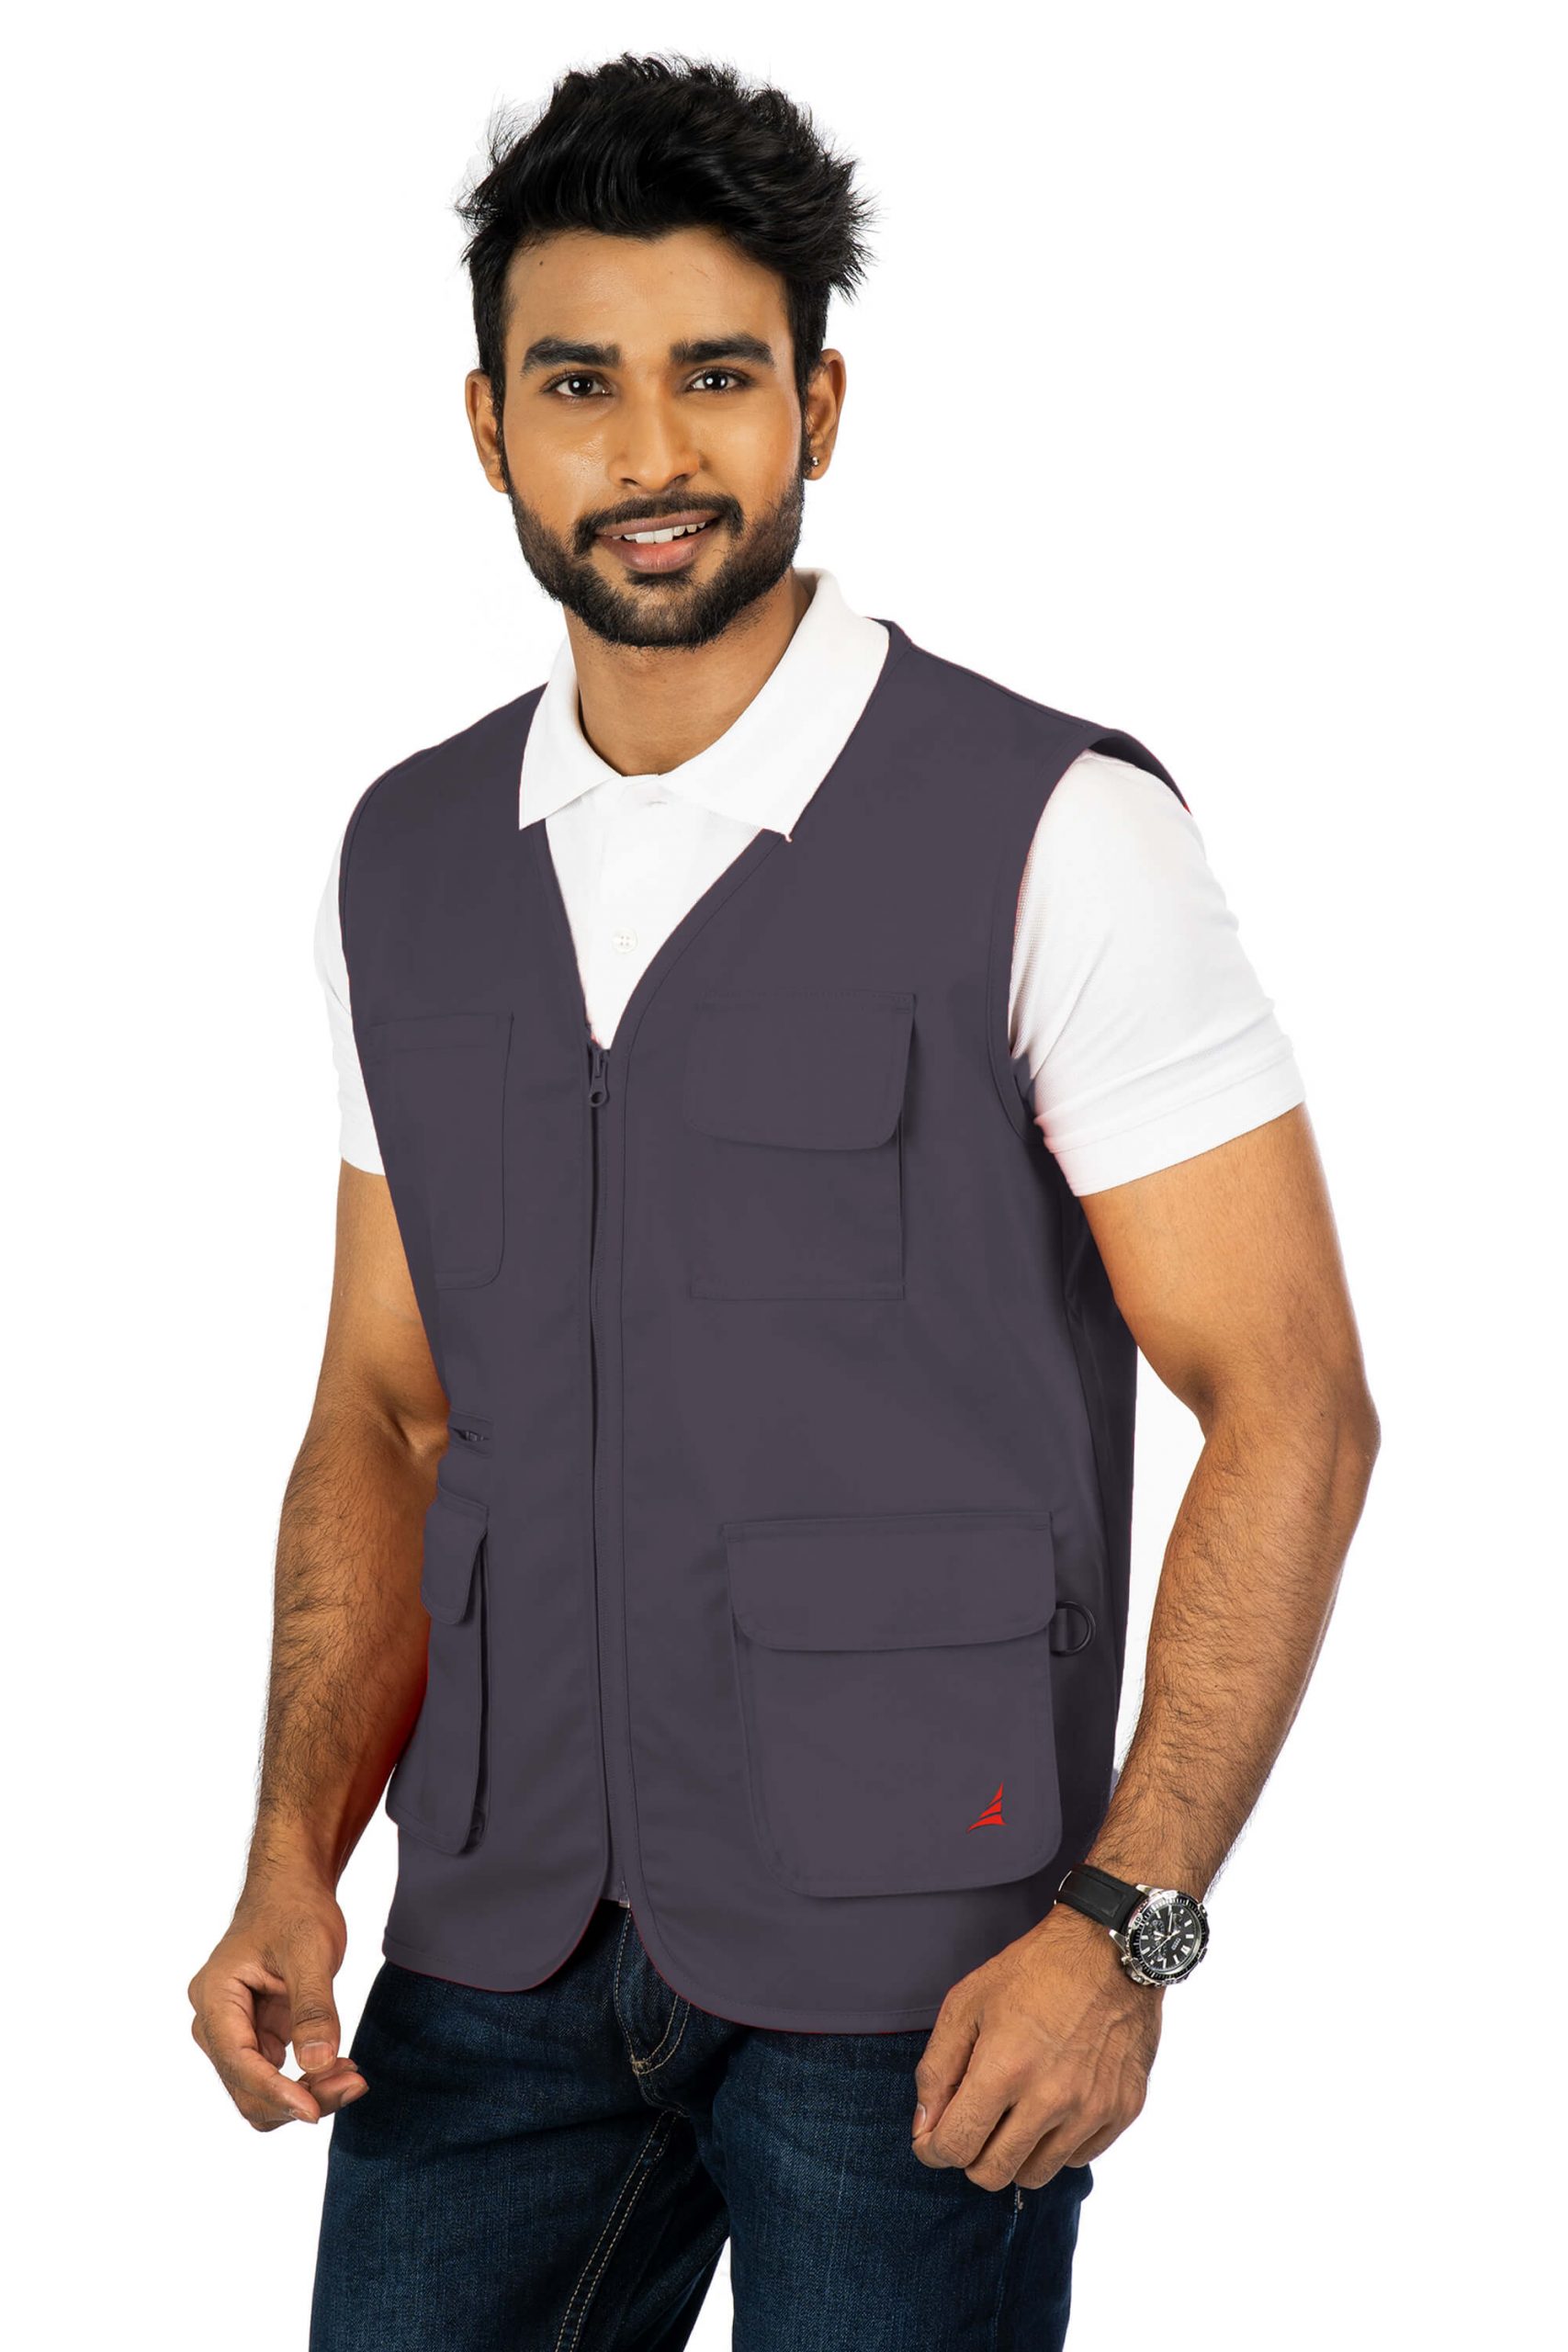 Stylised mid-torso bone pockets with concealed zips. An ergonomically designed multi-utility safari Dark Grey vest.